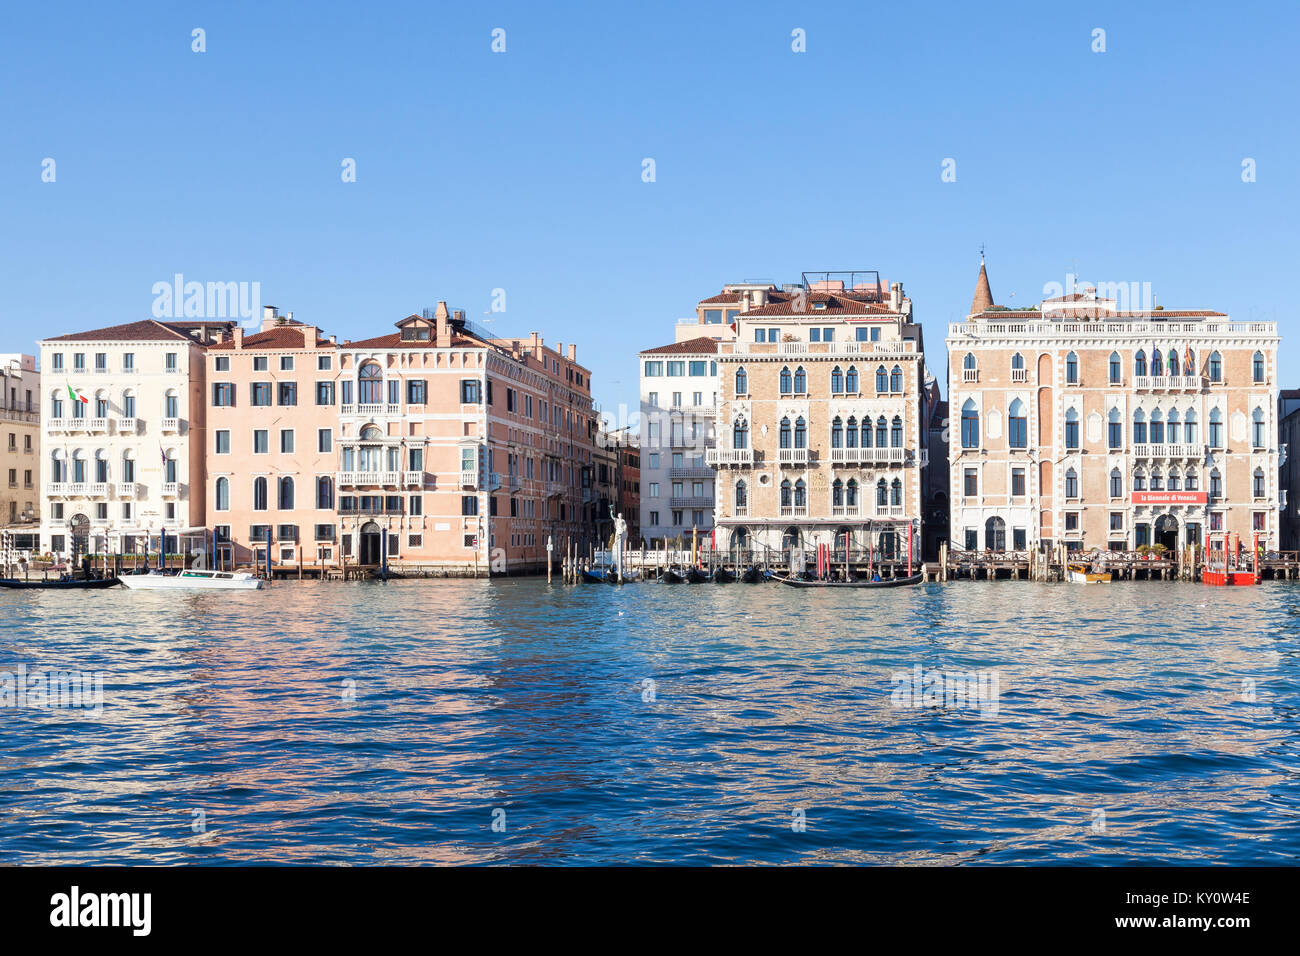 Palais sur le Grand Canal, San Marco, Venise, Italie avec le Palazzo Tiepolo, Palazzo Emo Treves dei Bonfili, Hôtel Danieli, Palazzo Palazzo Giustinian Banque D'Images